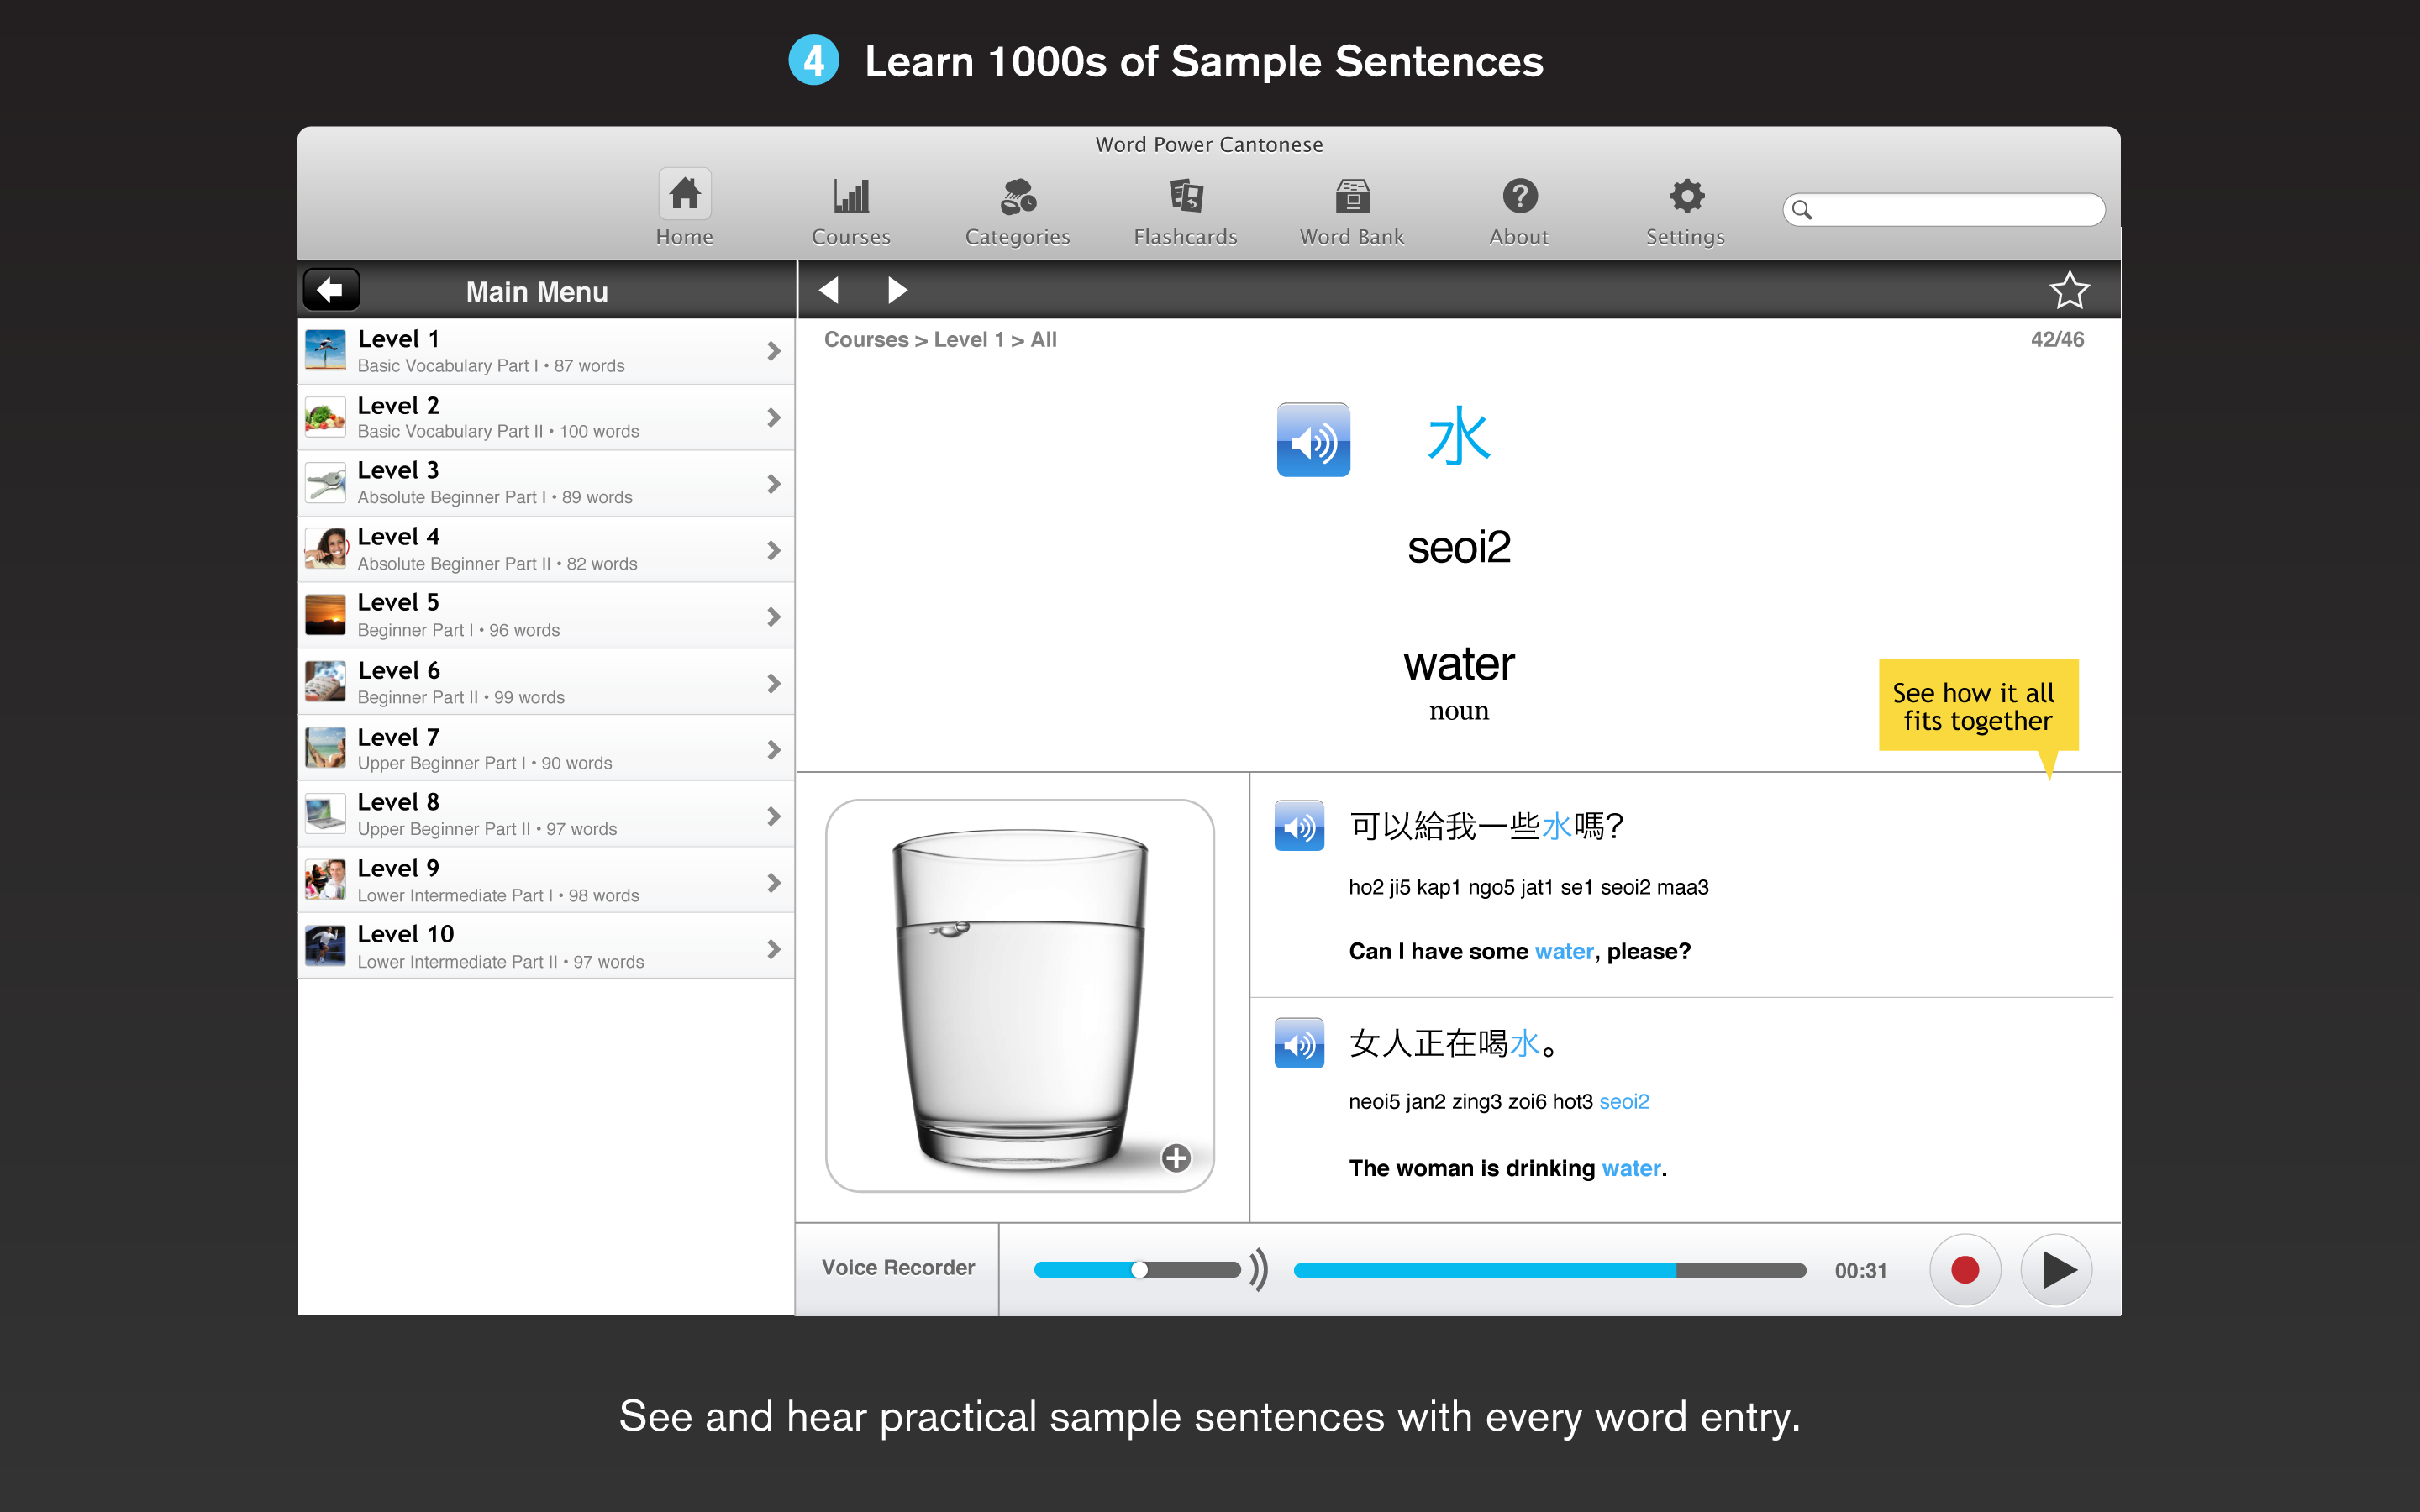 Screenshot 4 - Learn Cantonese Gengo WordPower 